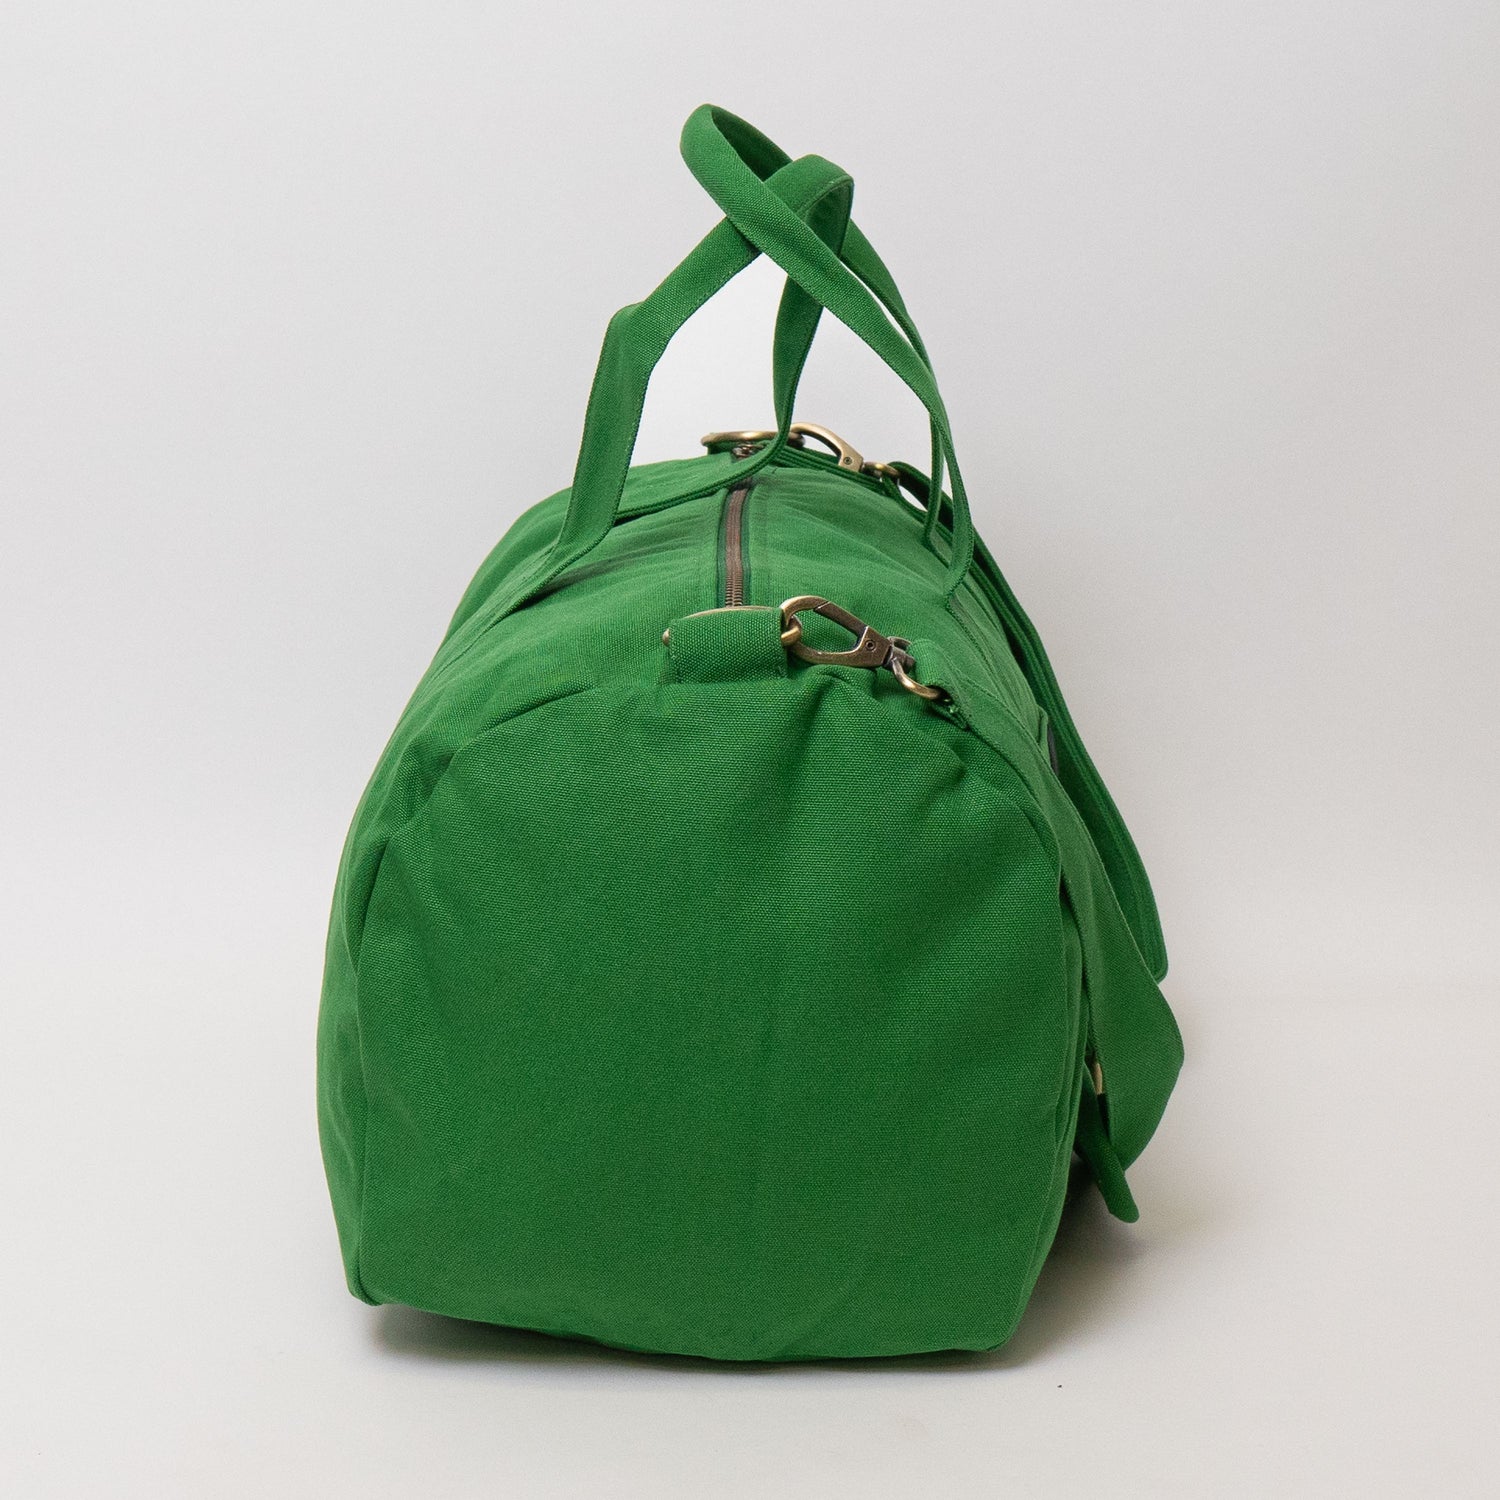 17" Duffle Bag Duffel Travel Size Sports Gym Bags Workout